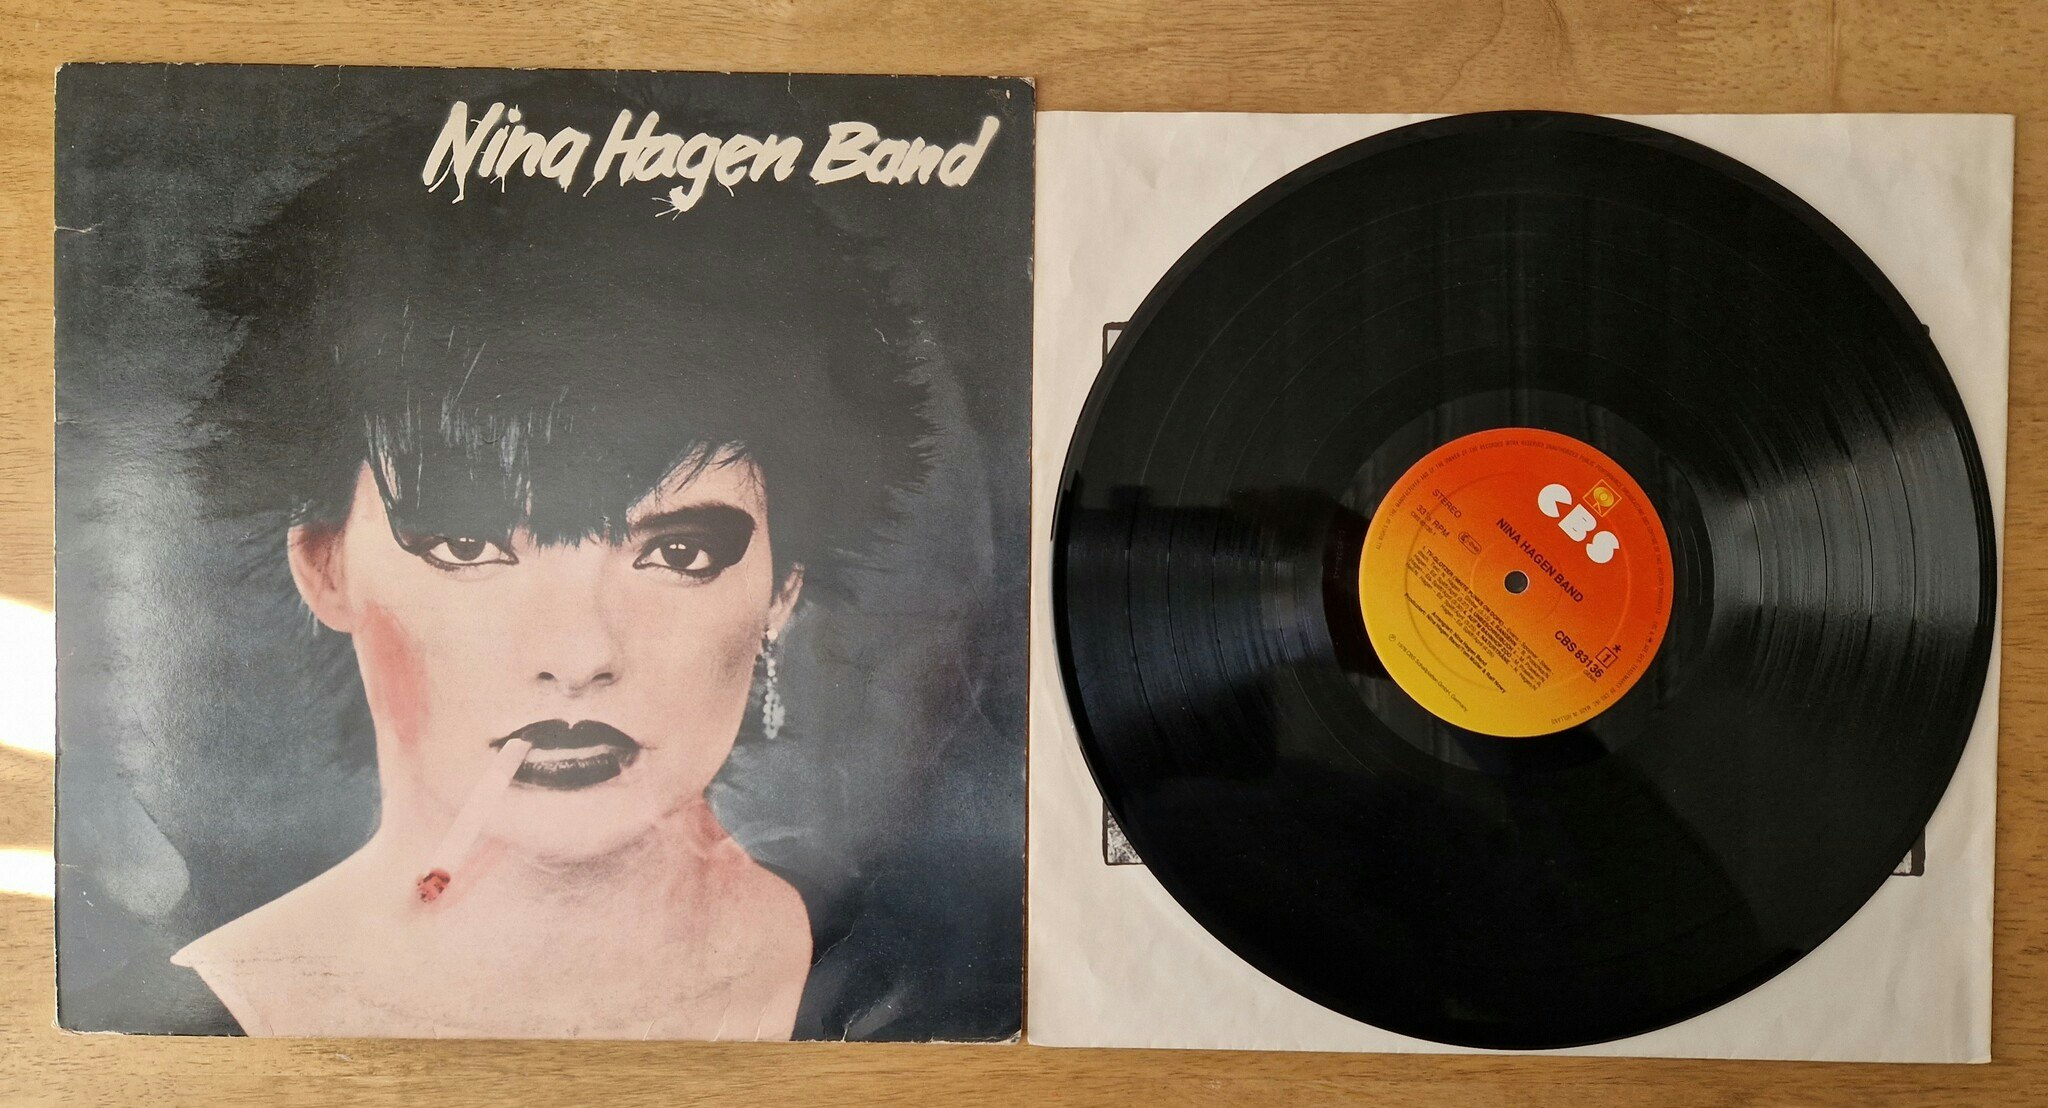 Nina Hagen Band, Nina Hagen Band. Vinyl LP